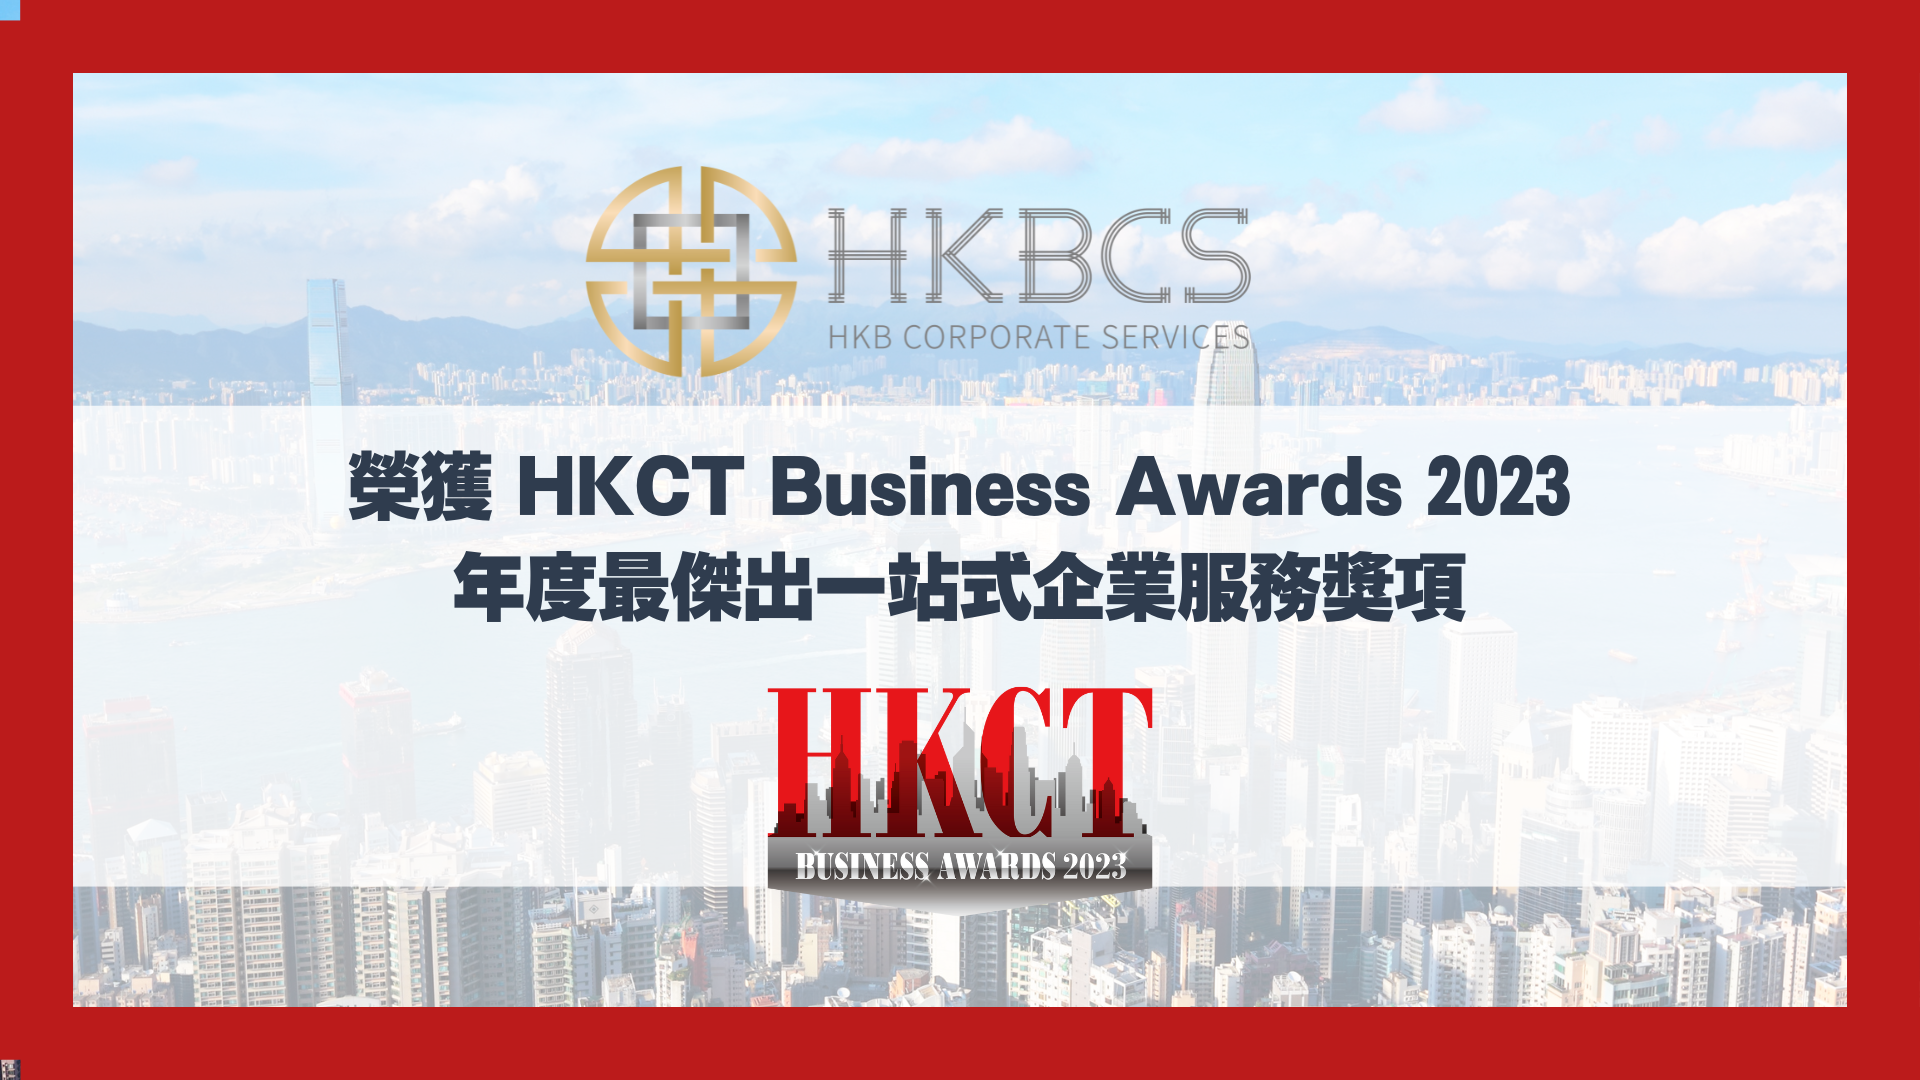 HKBCS榮獲HKCT企業大獎2023 – 年度最傑出一站式企業服務獎項